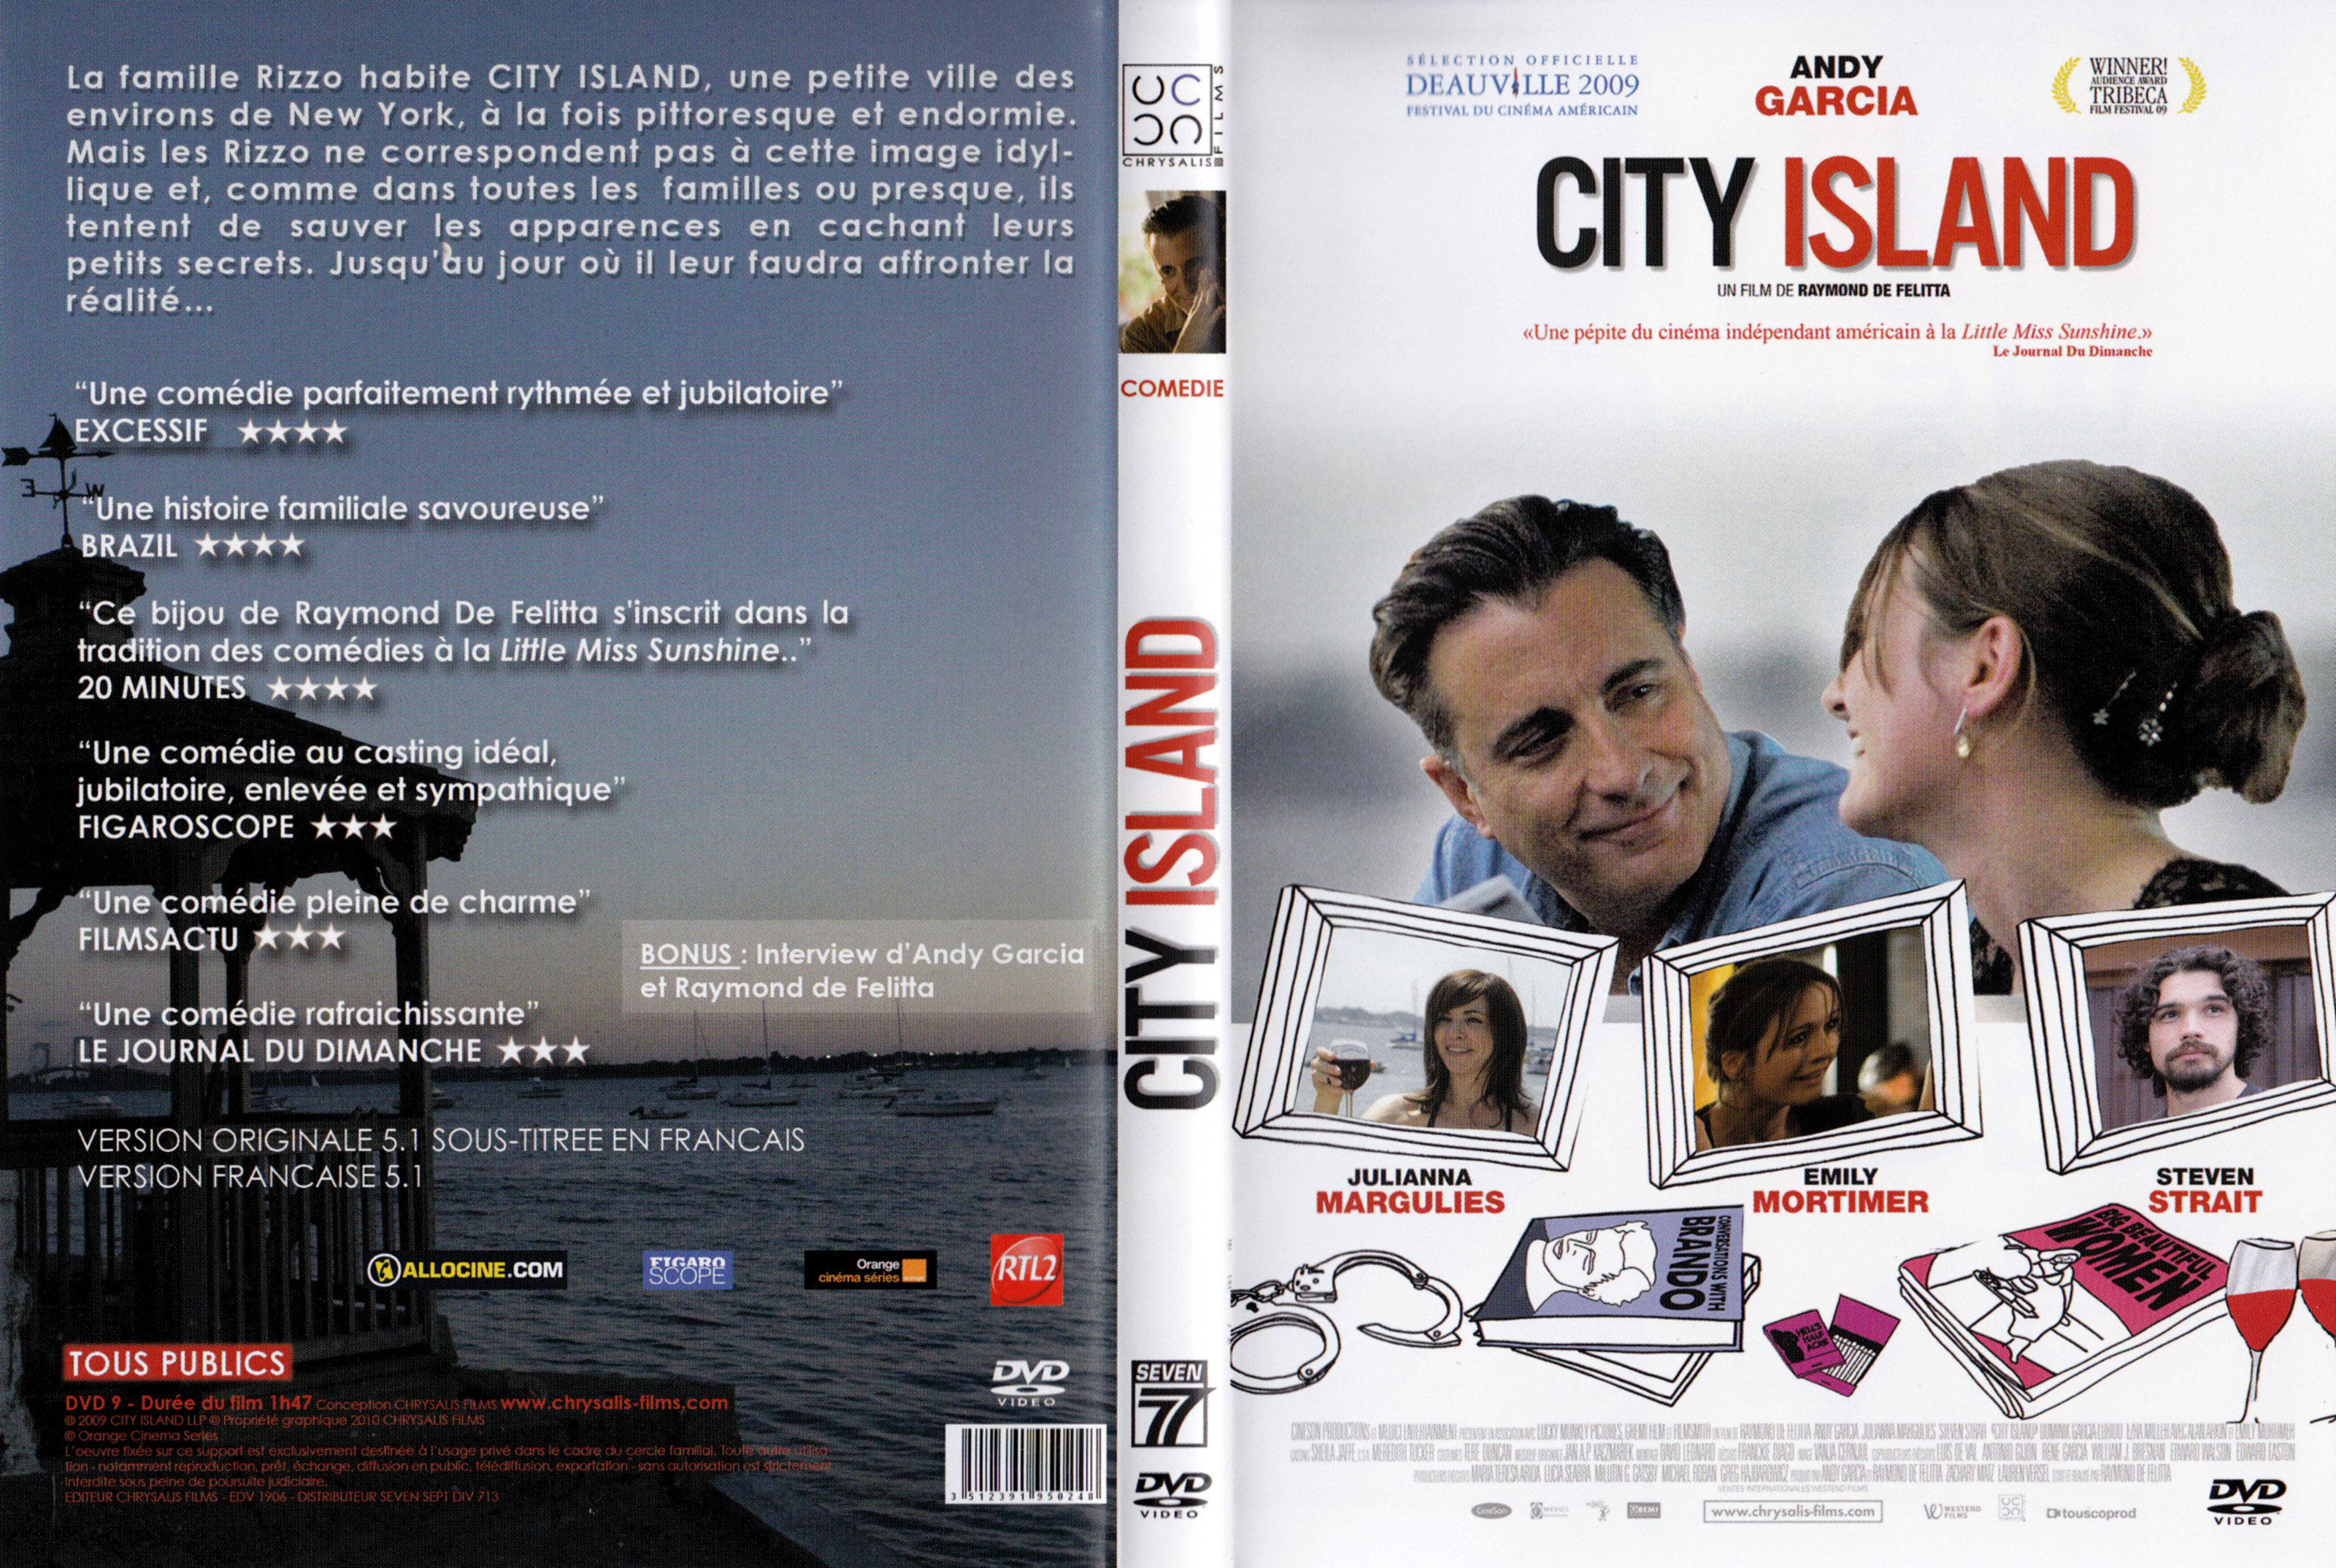 Jaquette DVD City island